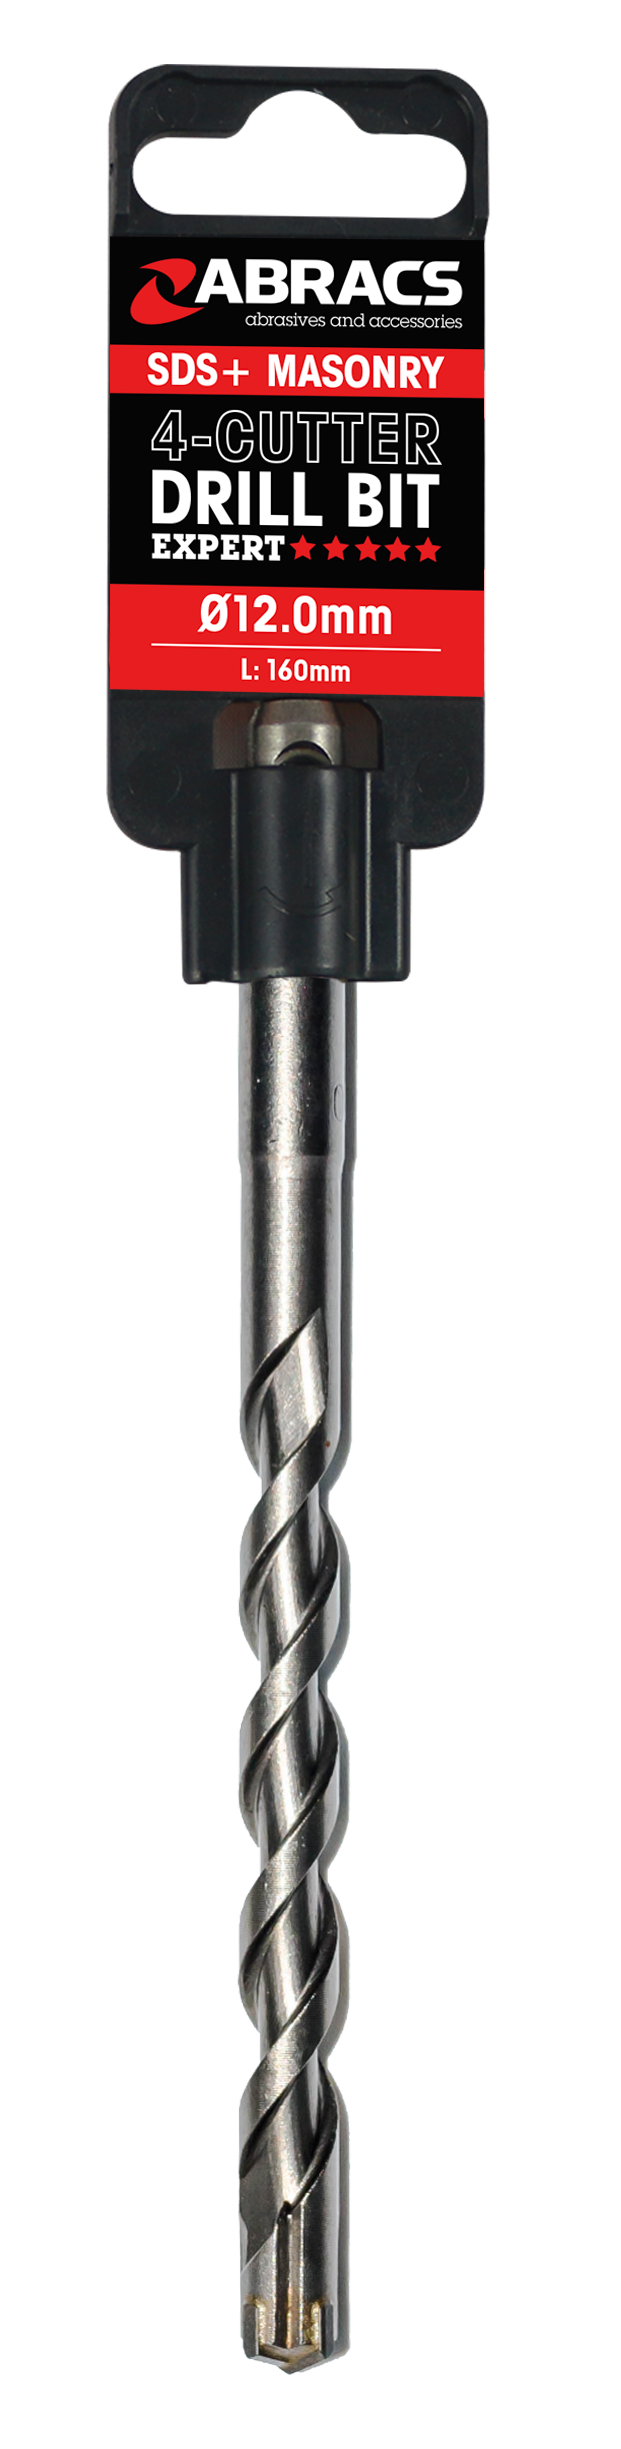 DBCX065210 6.5mm x 210mm SDS+ Masonry Drill Bit - 4 Cutter